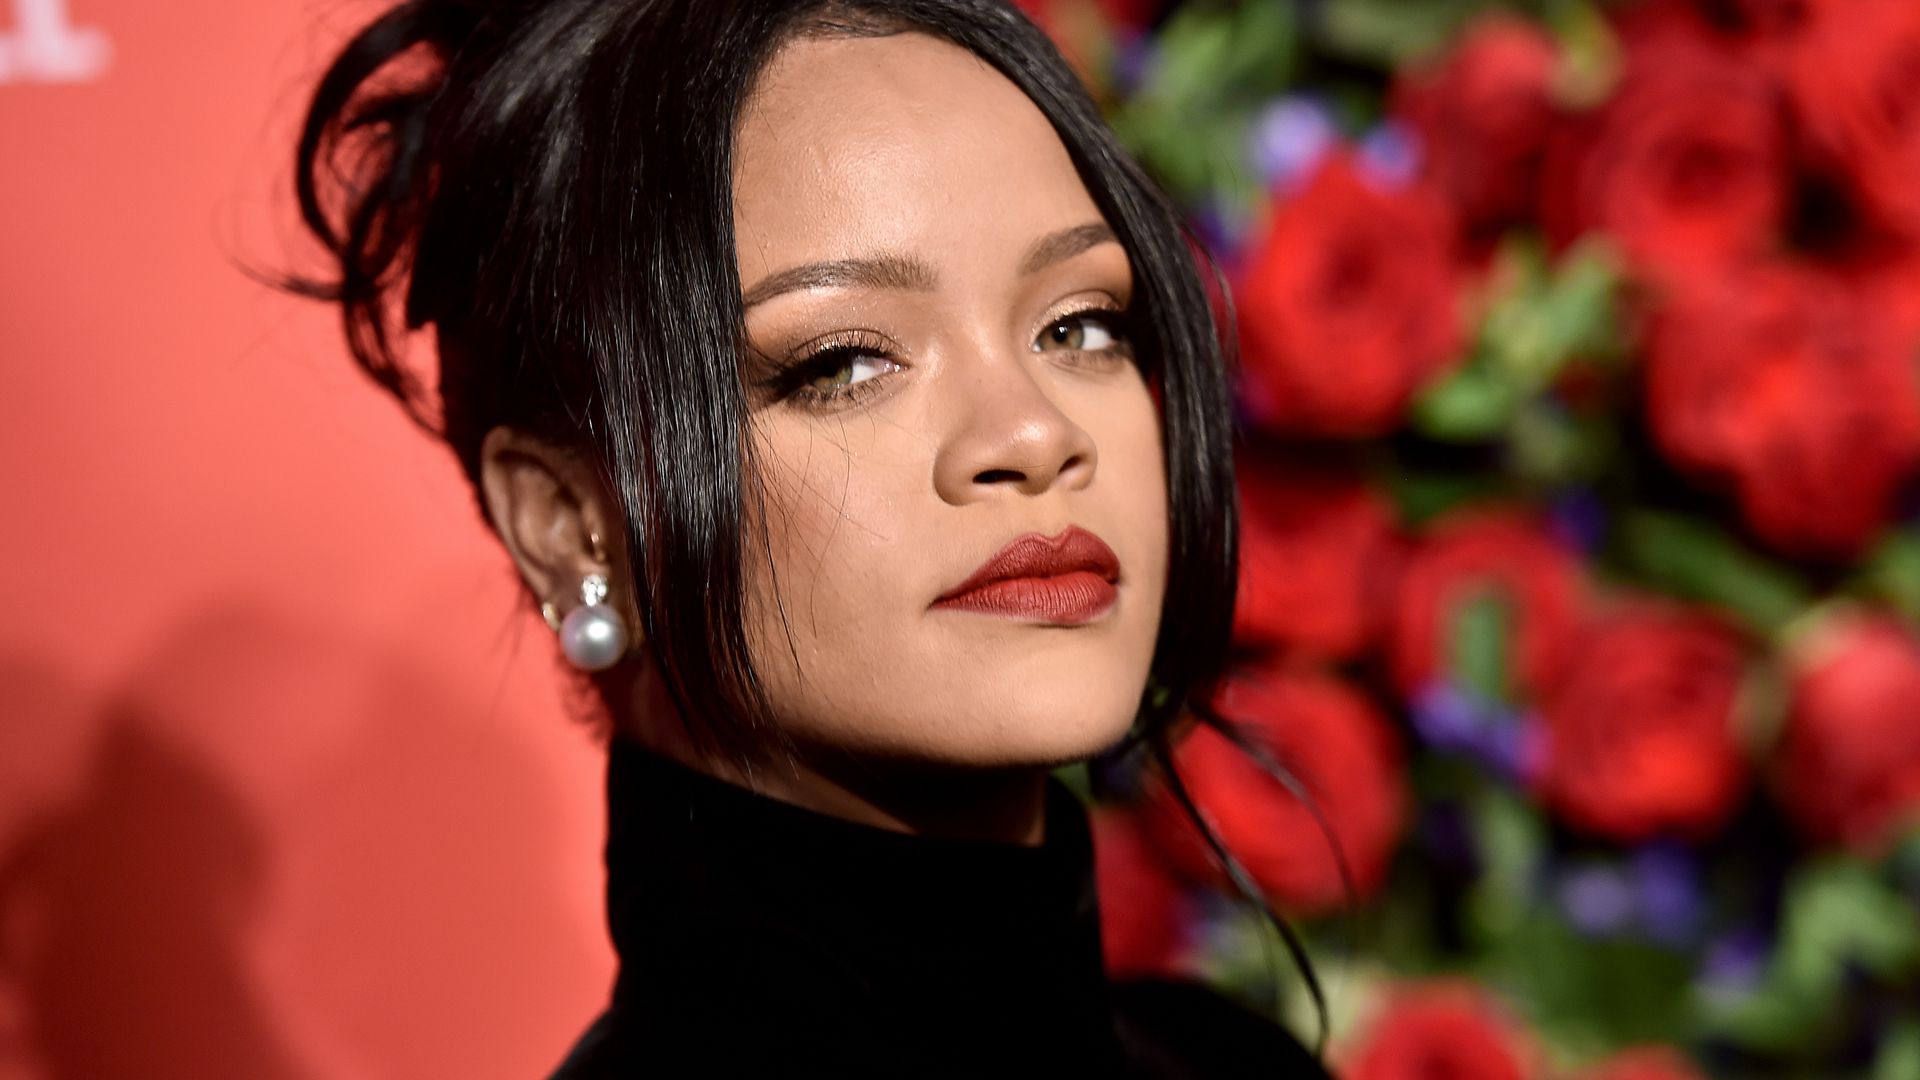 Rihanna attends Rihanna's 5th Annual Diamond Ball 